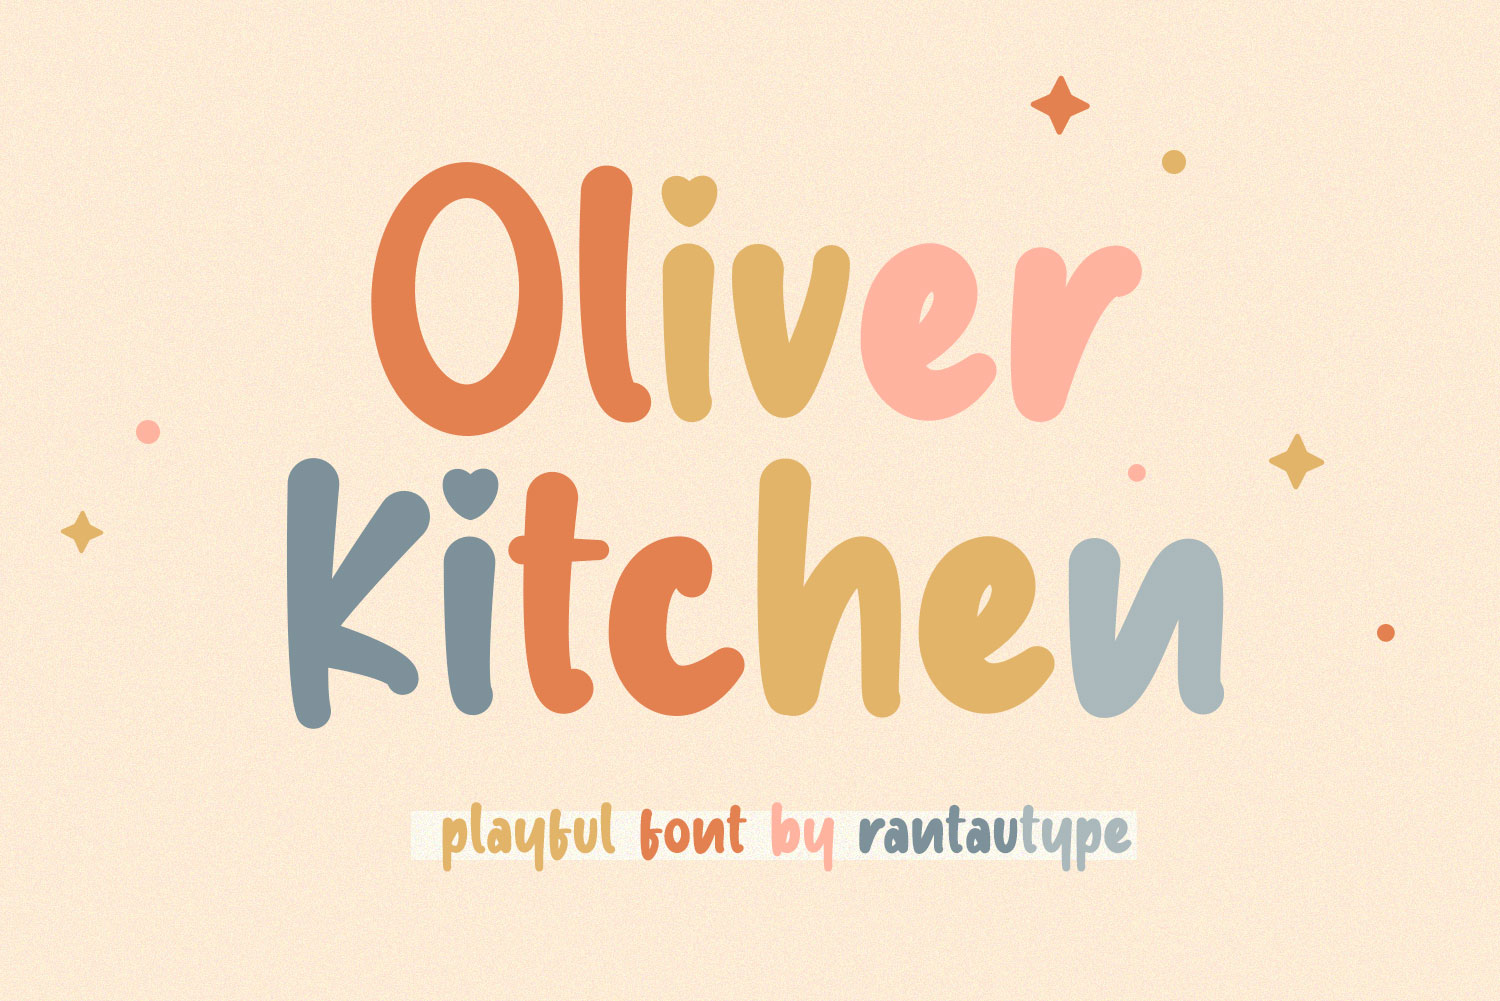 Oliver Kitchen